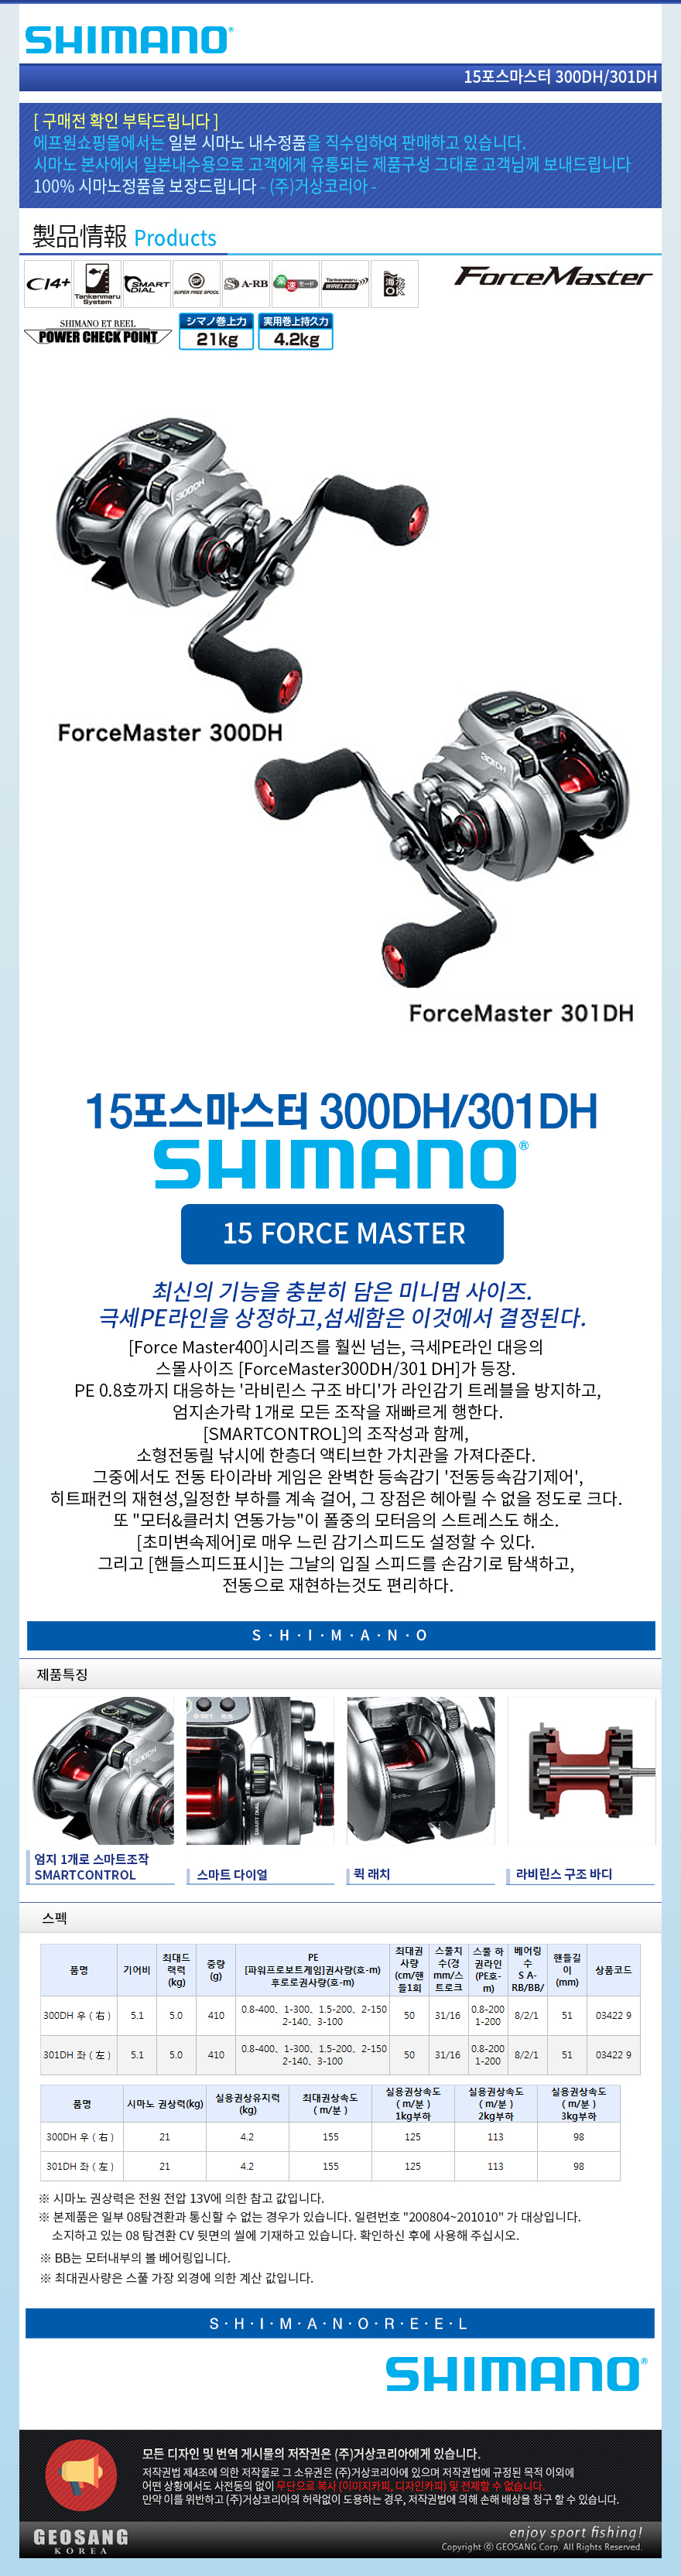 shimano_15force-master300_1.jpg